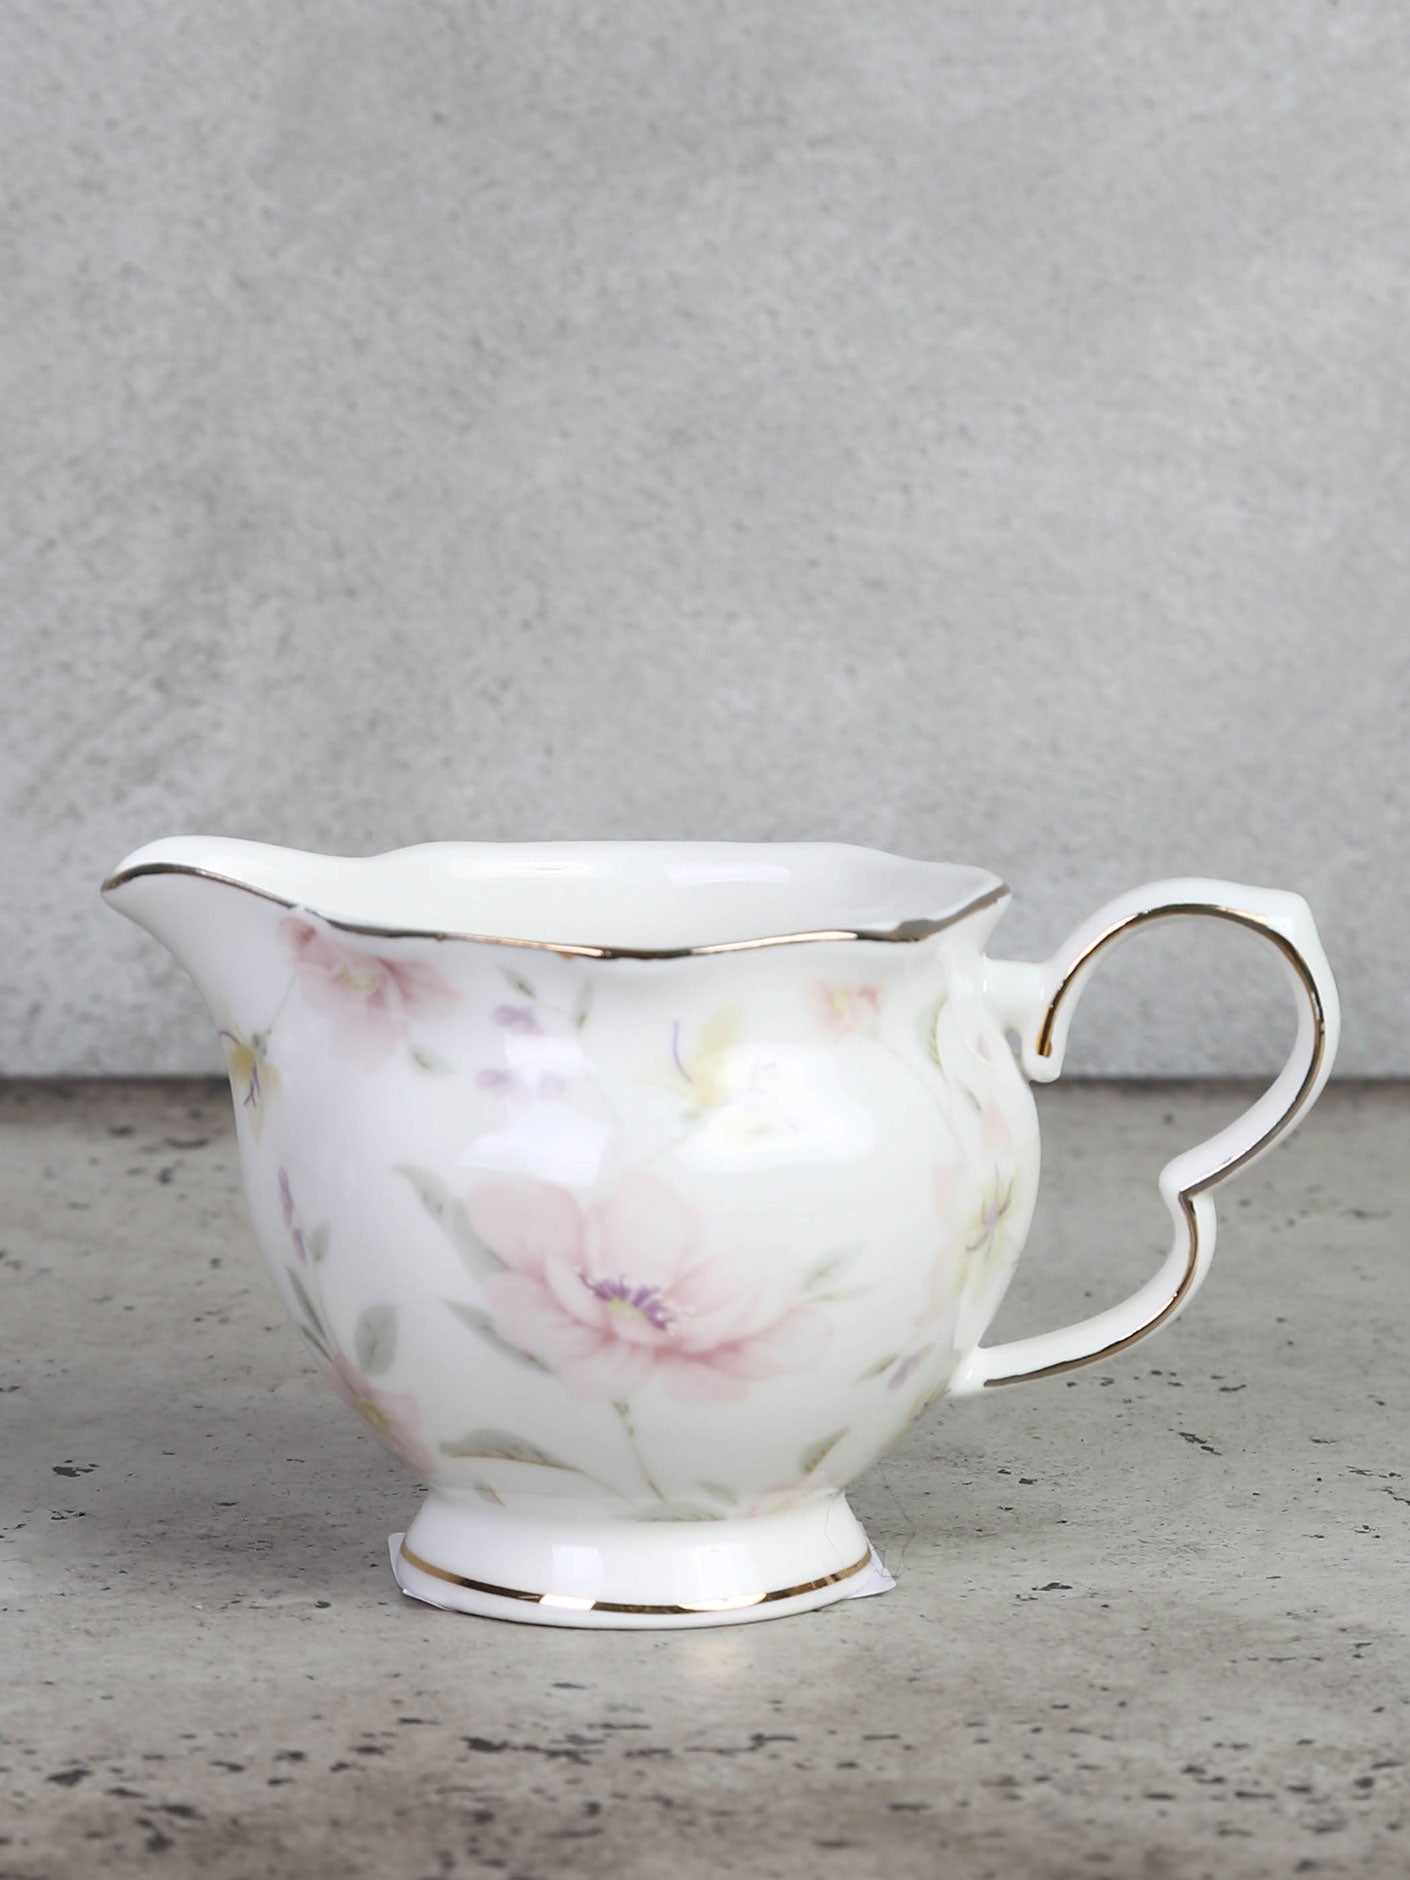 Milk jug or cream jug with floral motif and gold edge